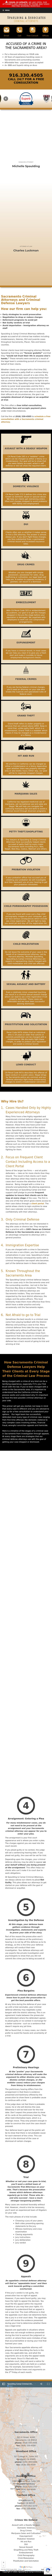 Summit Defense Attorneys - Roseville CA Lawyers